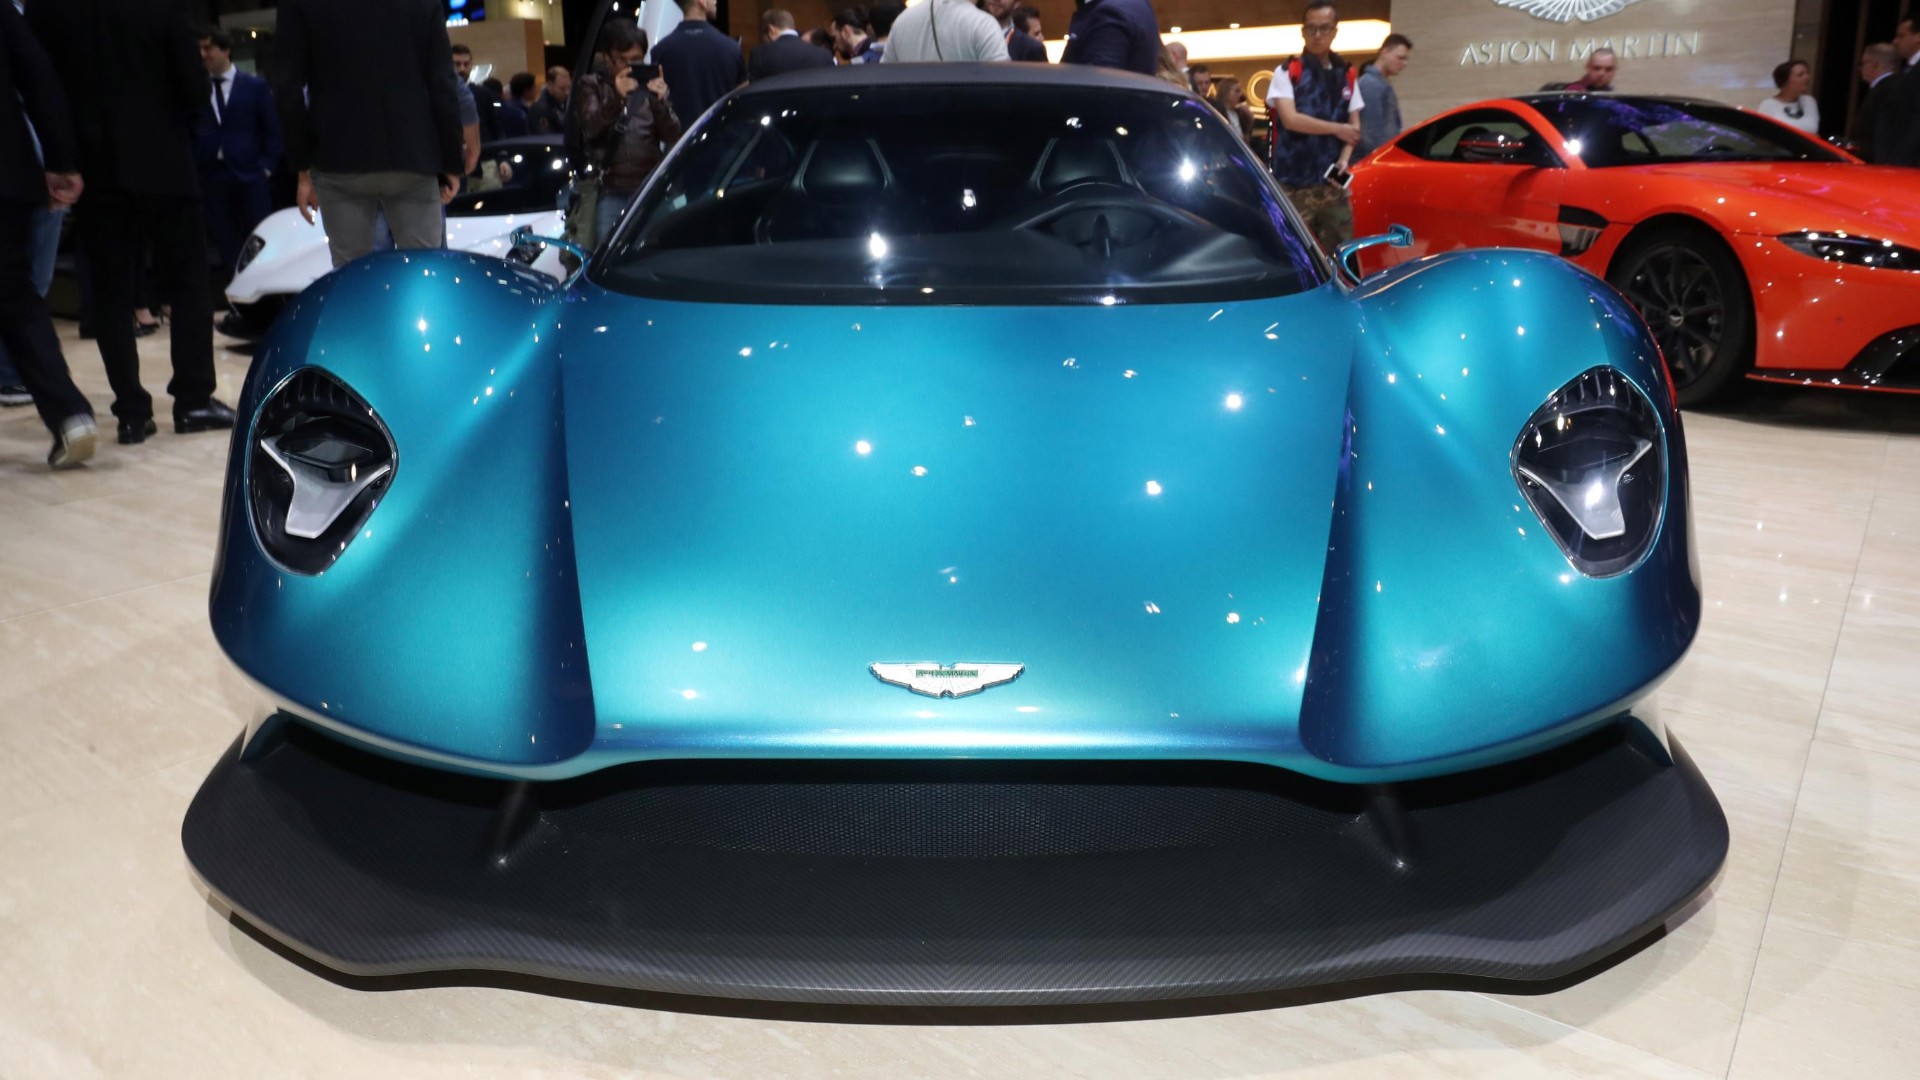 Next Aston Martin Vanquish could get a manual transmission